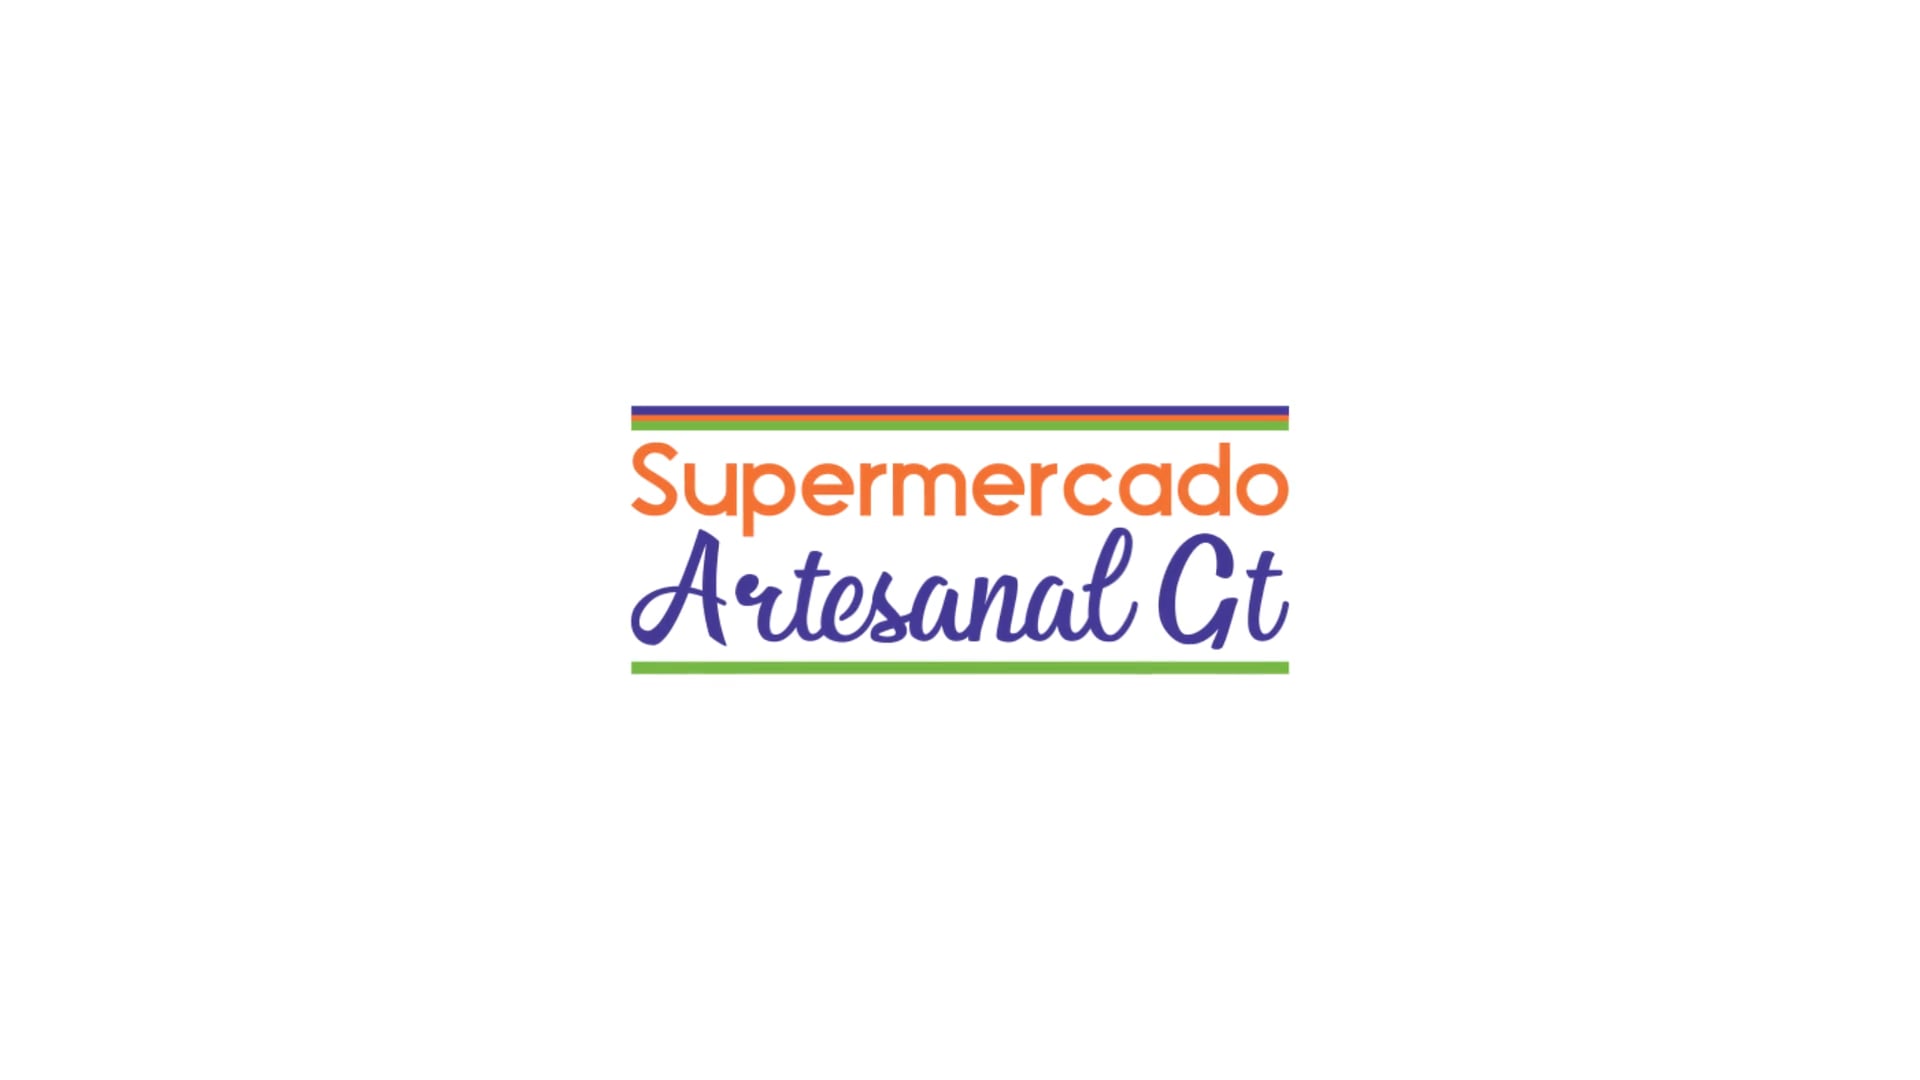 Supermercado Artesanal Gt